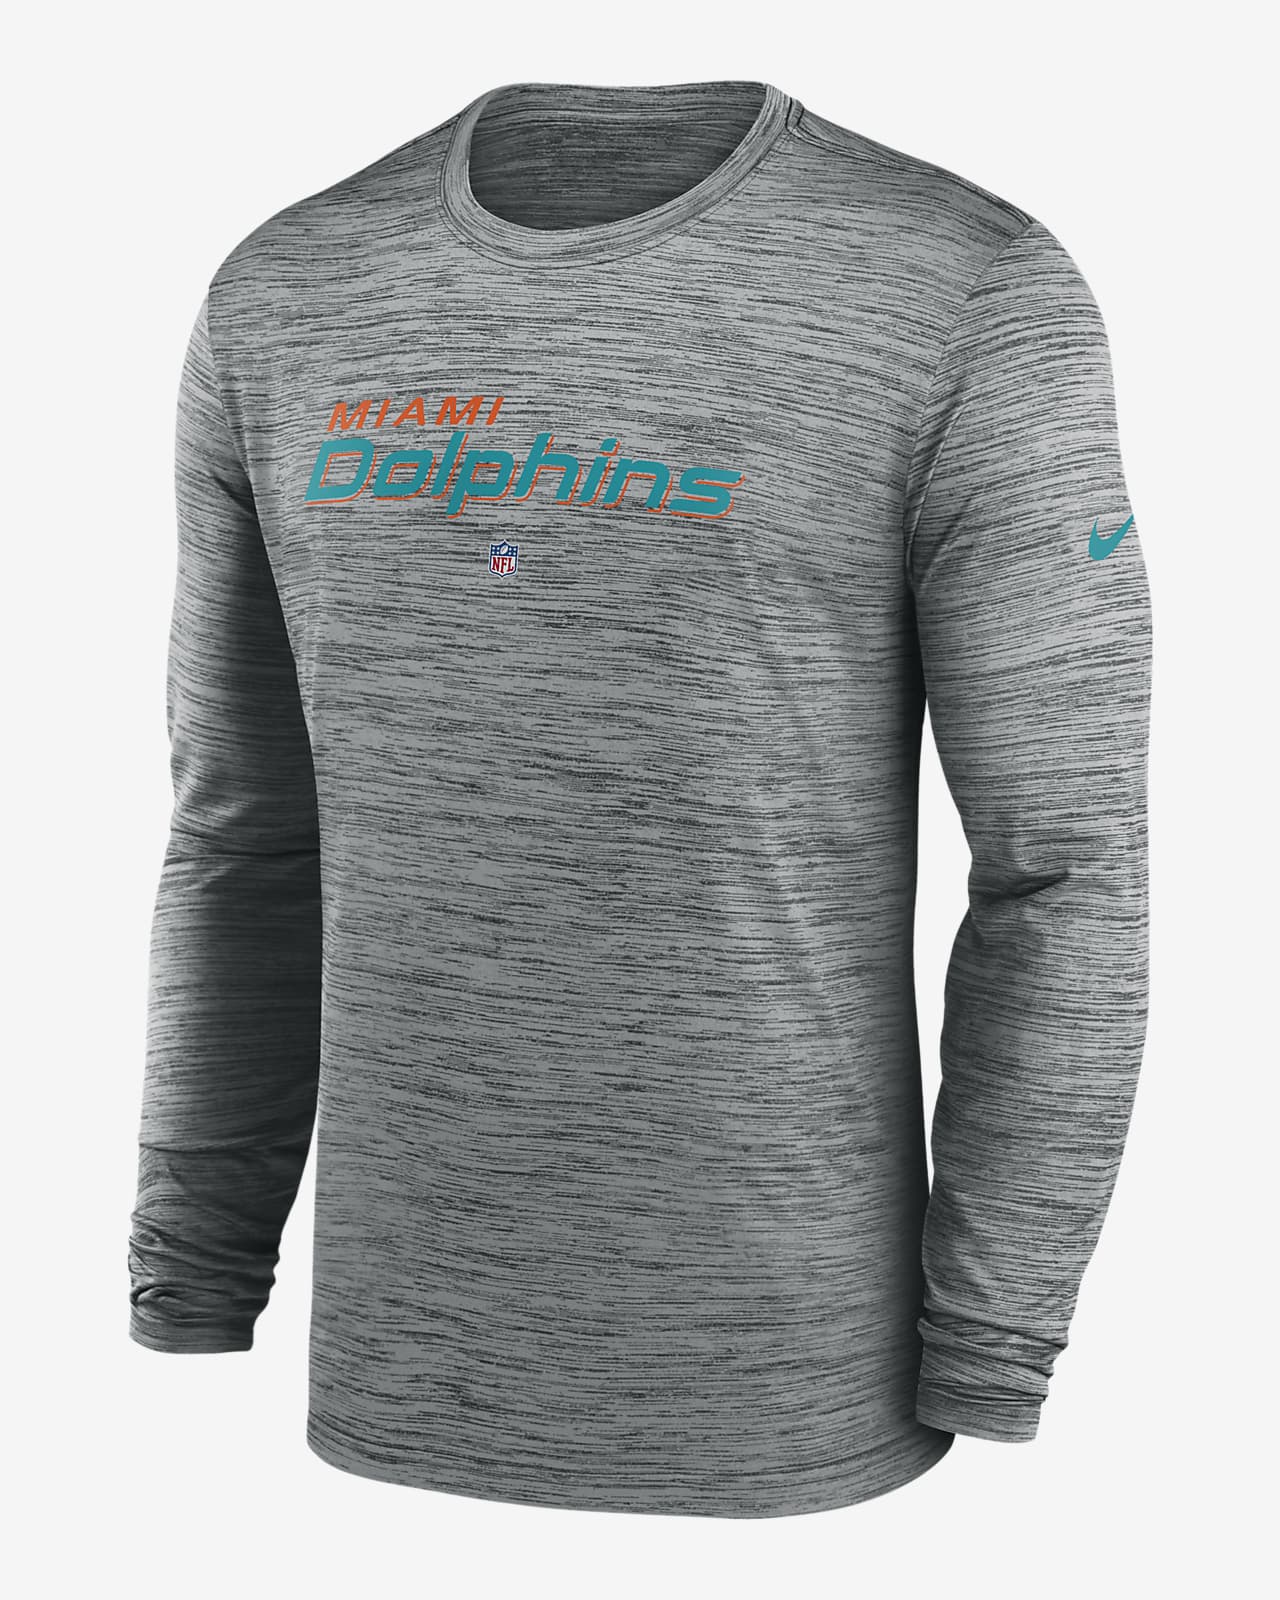 Nike Men's Miami Dolphins Sideline Velocity Long Sleeve T-Shirt - Dark Grey Heather - XXL Each